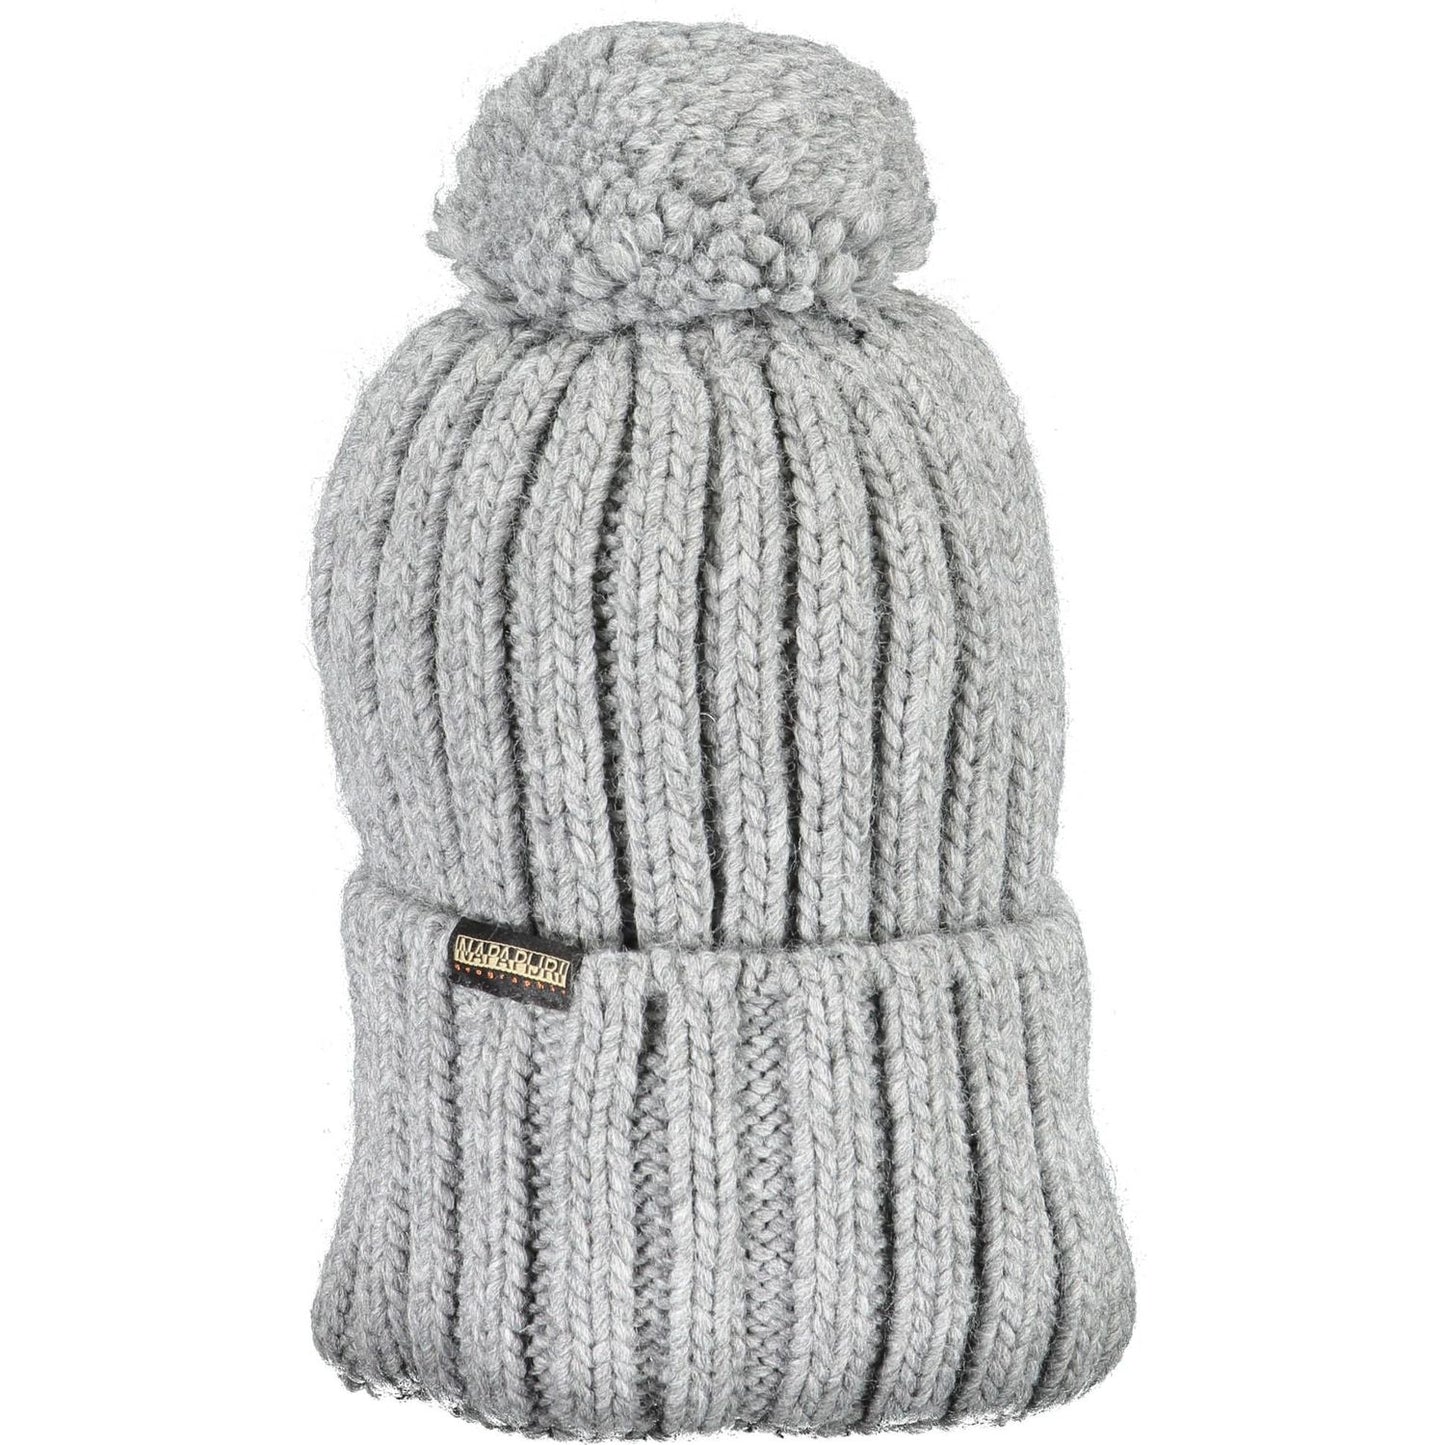 Napapijri Stylish Pompon-Accented Winter Hat gray-wool-hats-cap